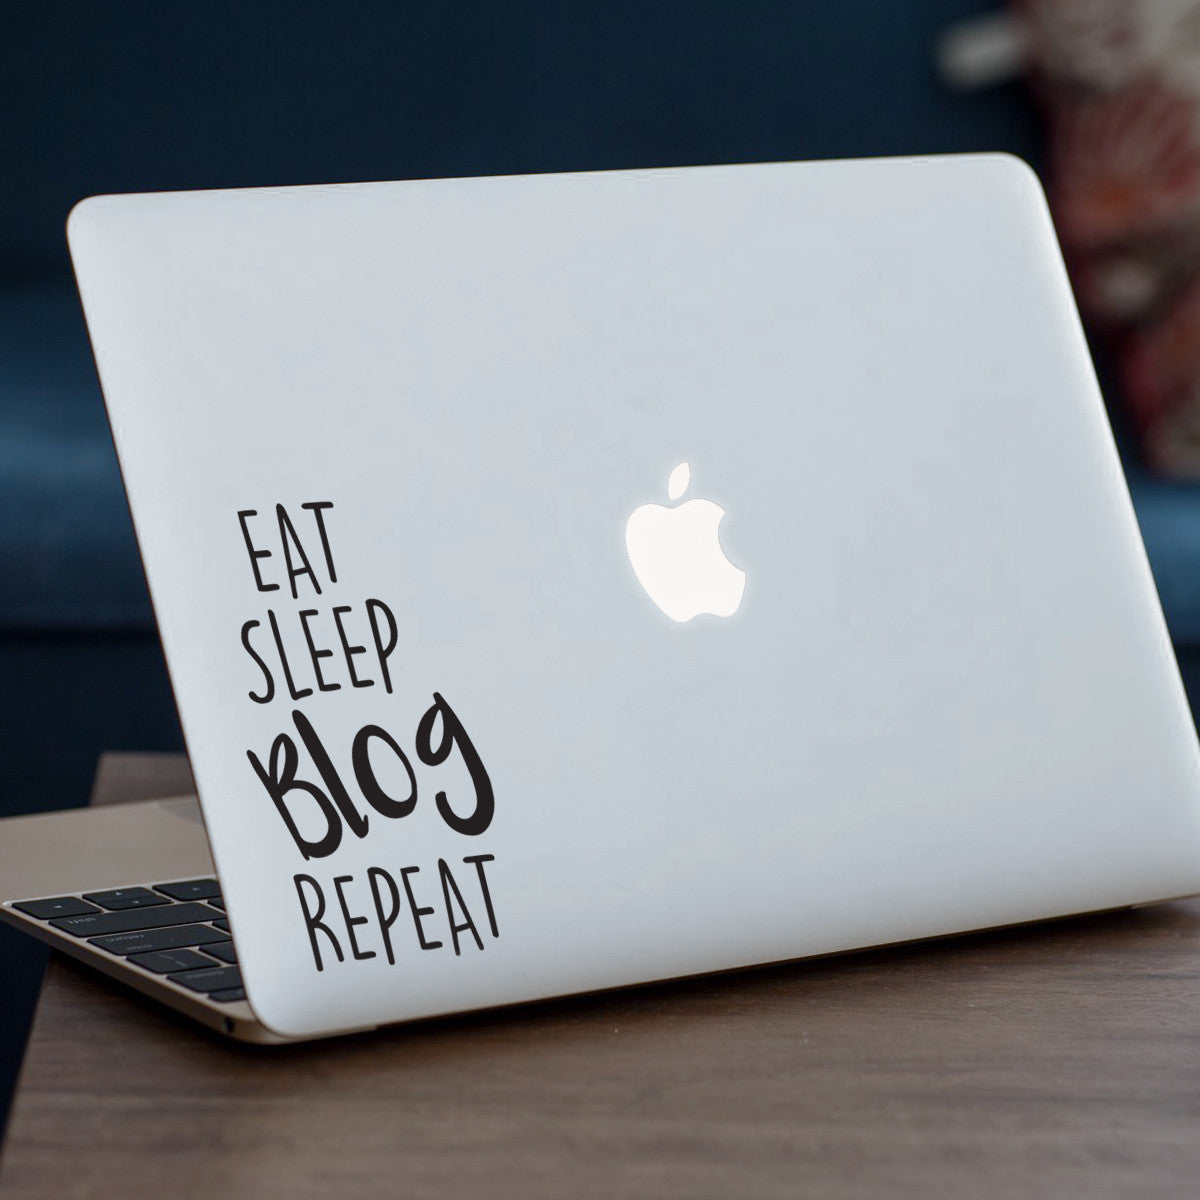 Eat Sleep Blog Repeat Quote Macbook Decal